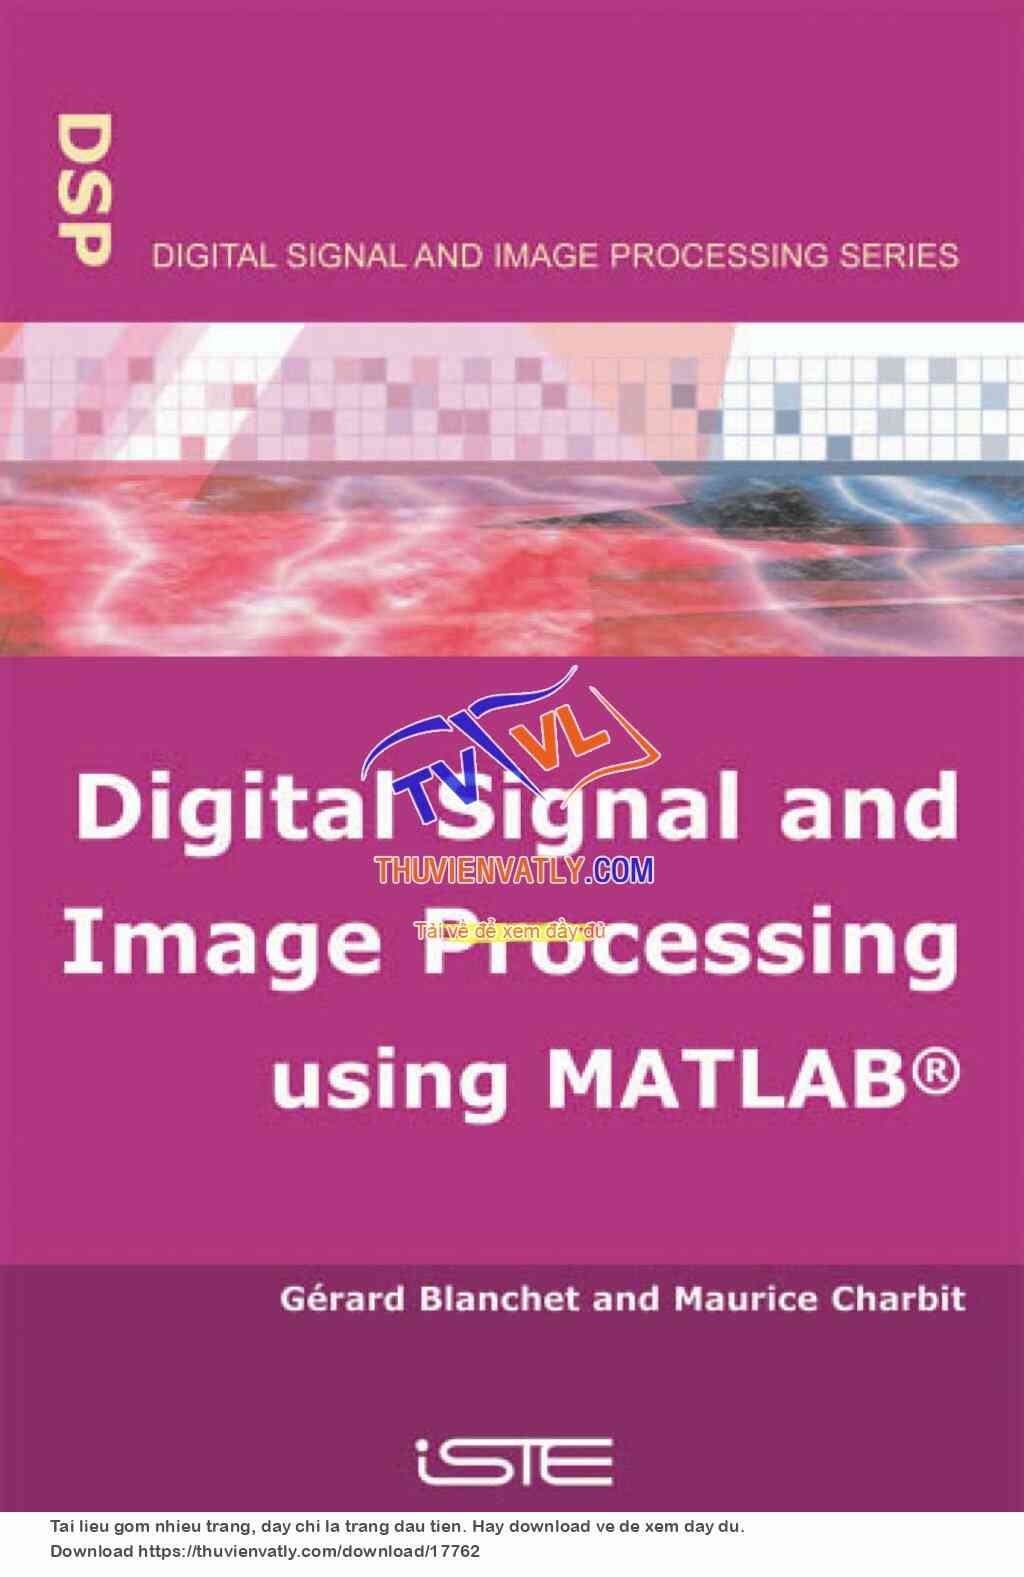 Digital Signal and Image Processing Using MATLAB - Gerard Blanchet & Maurice Charbit